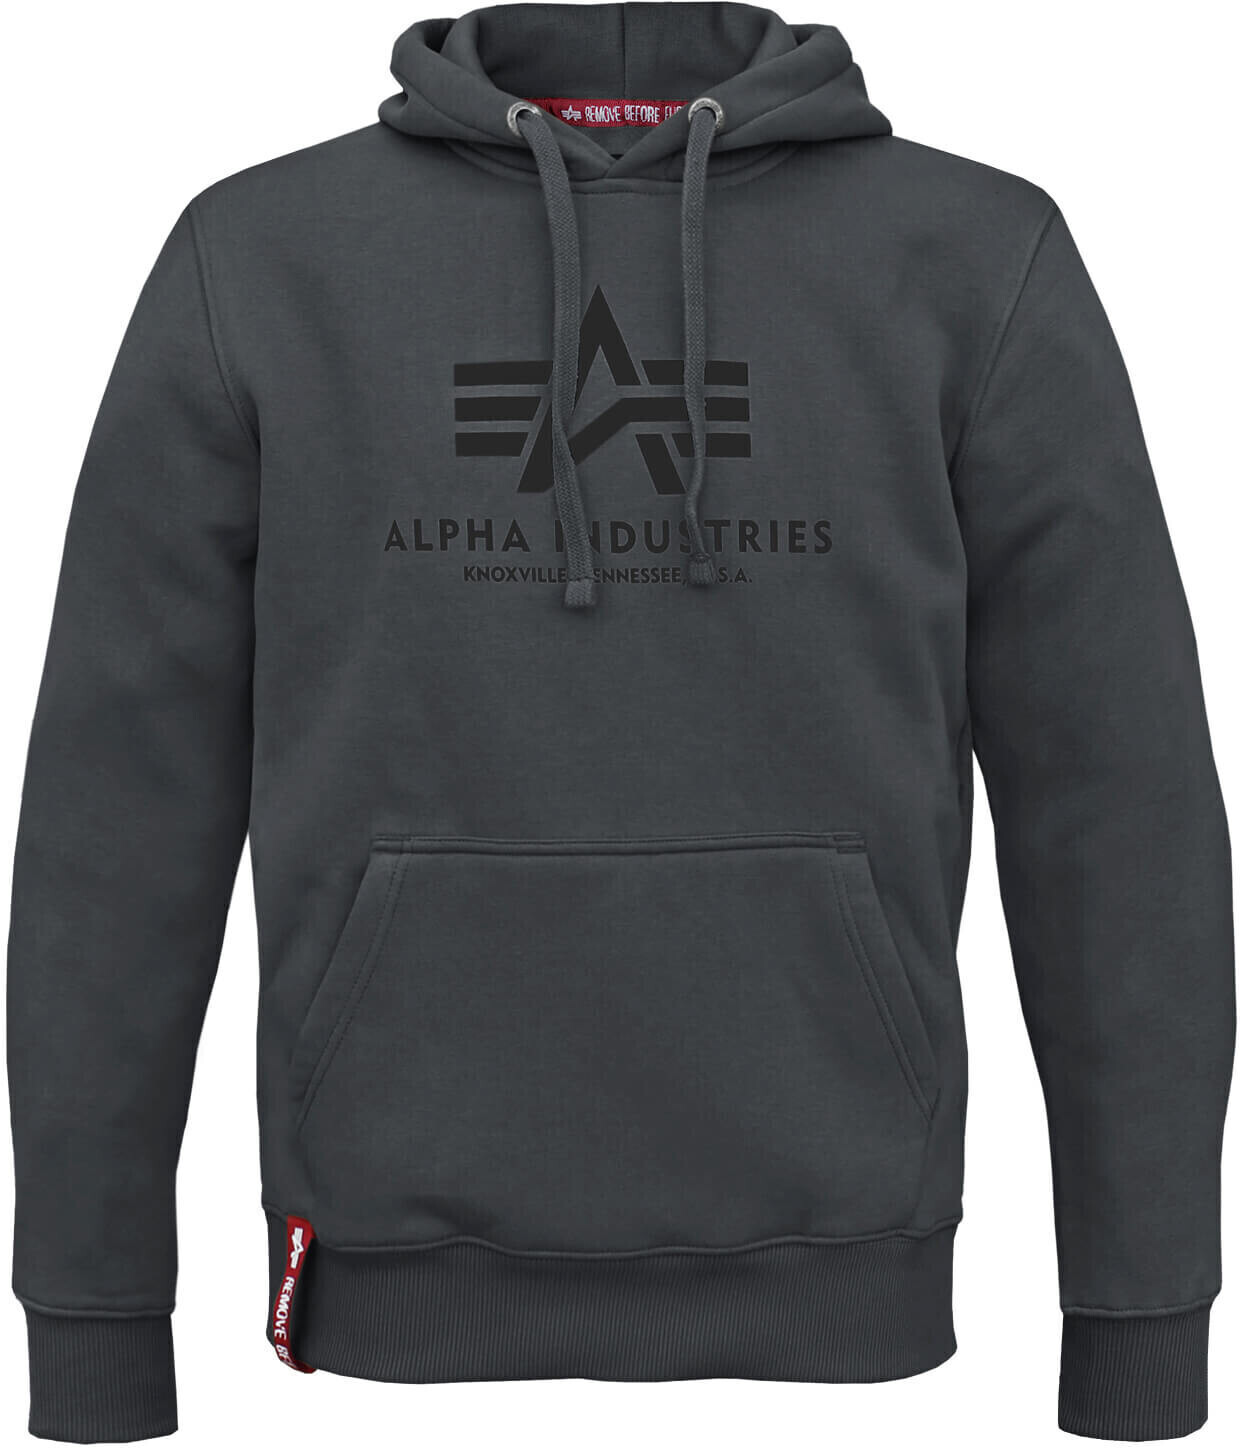 Alpha Industries Basic Hoody greyblack (178312-412) ab 46,90 € |  Preisvergleich bei